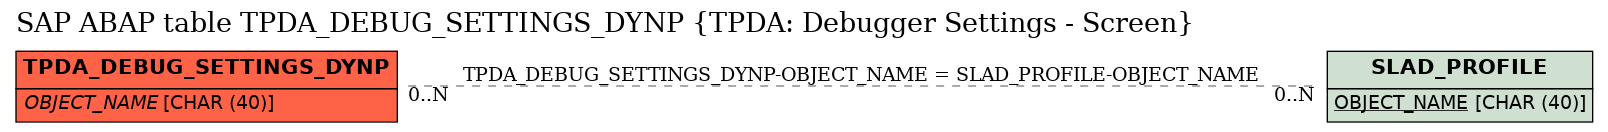 E-R Diagram for table TPDA_DEBUG_SETTINGS_DYNP (TPDA: Debugger Settings - Screen)